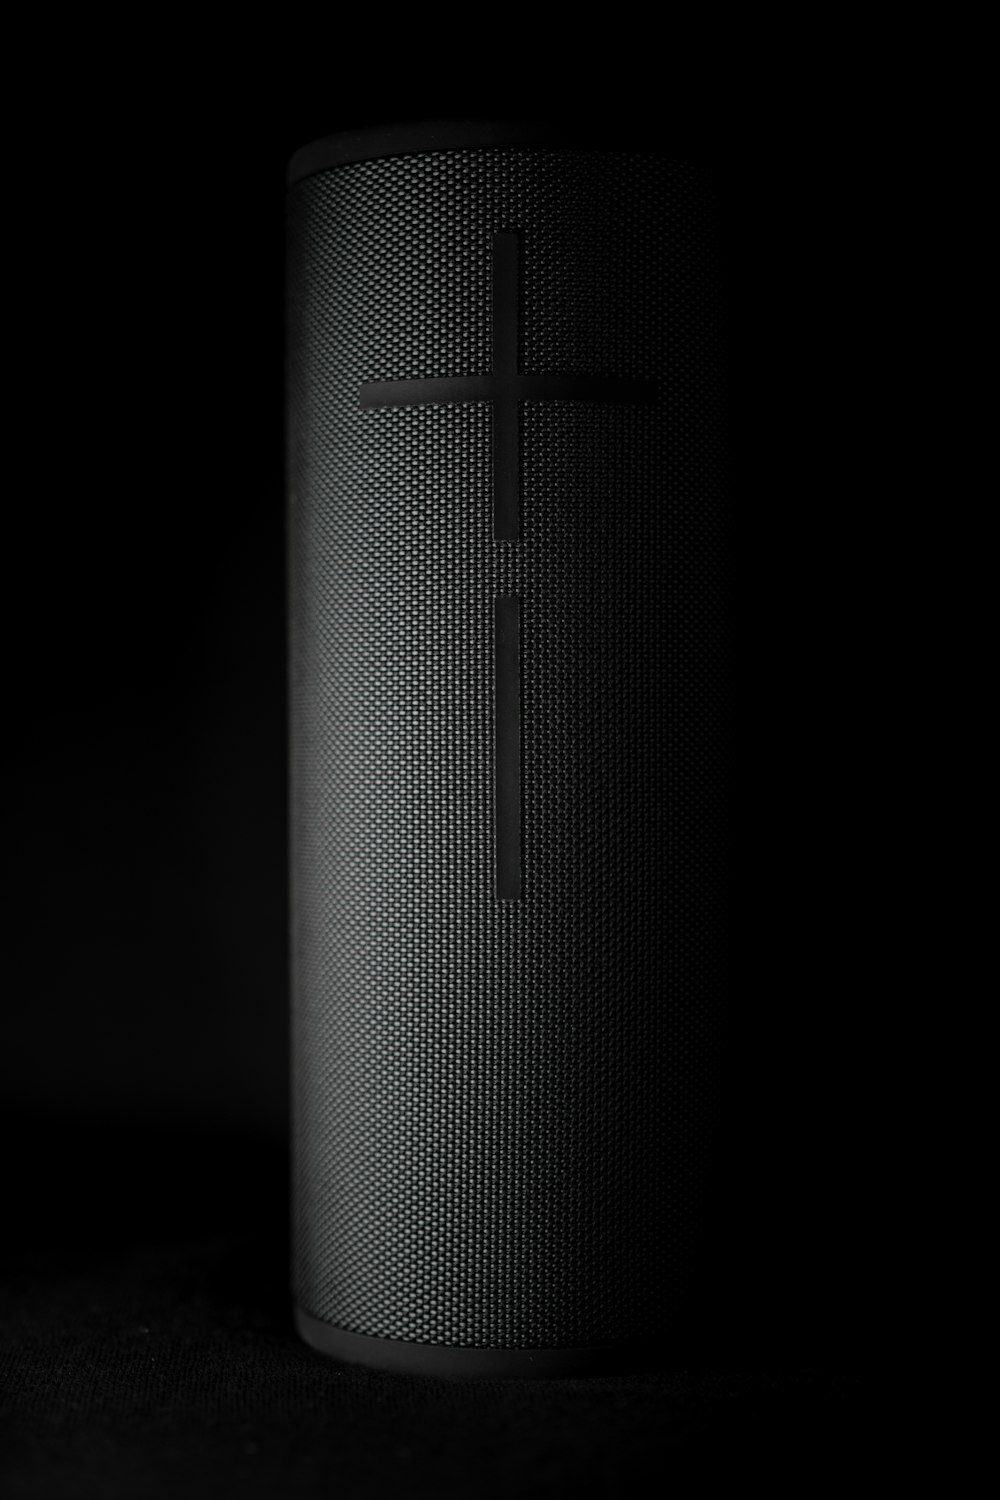 a black speaker with a cross on it